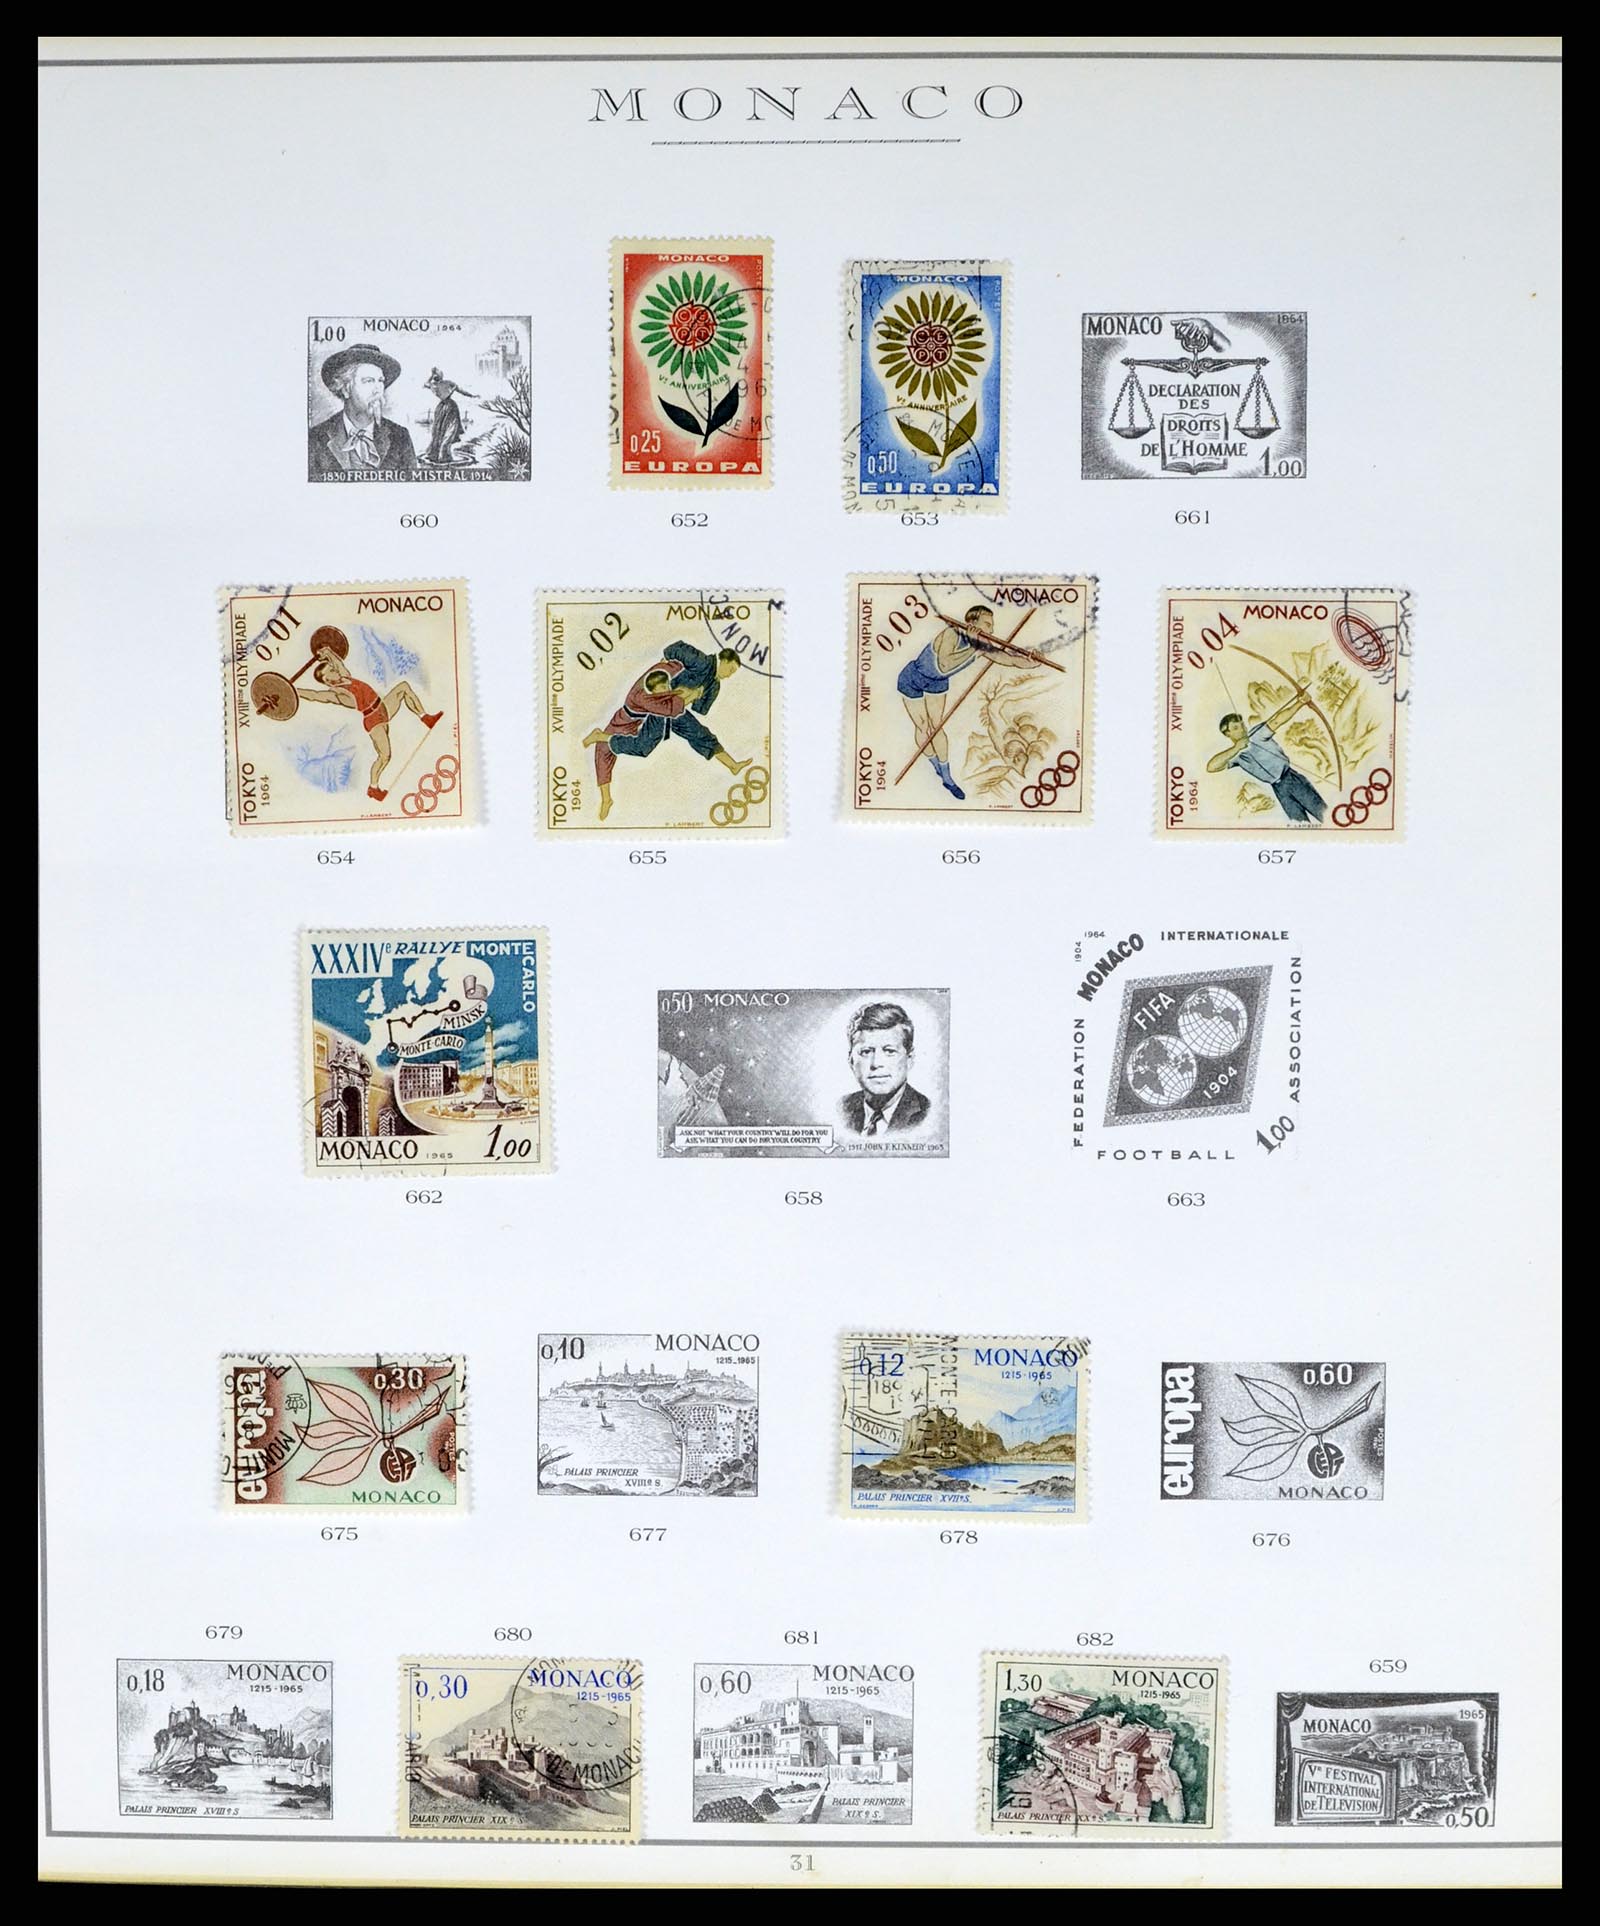 37437 060 - Stamp collection 37437 Monaco 1885-1996.